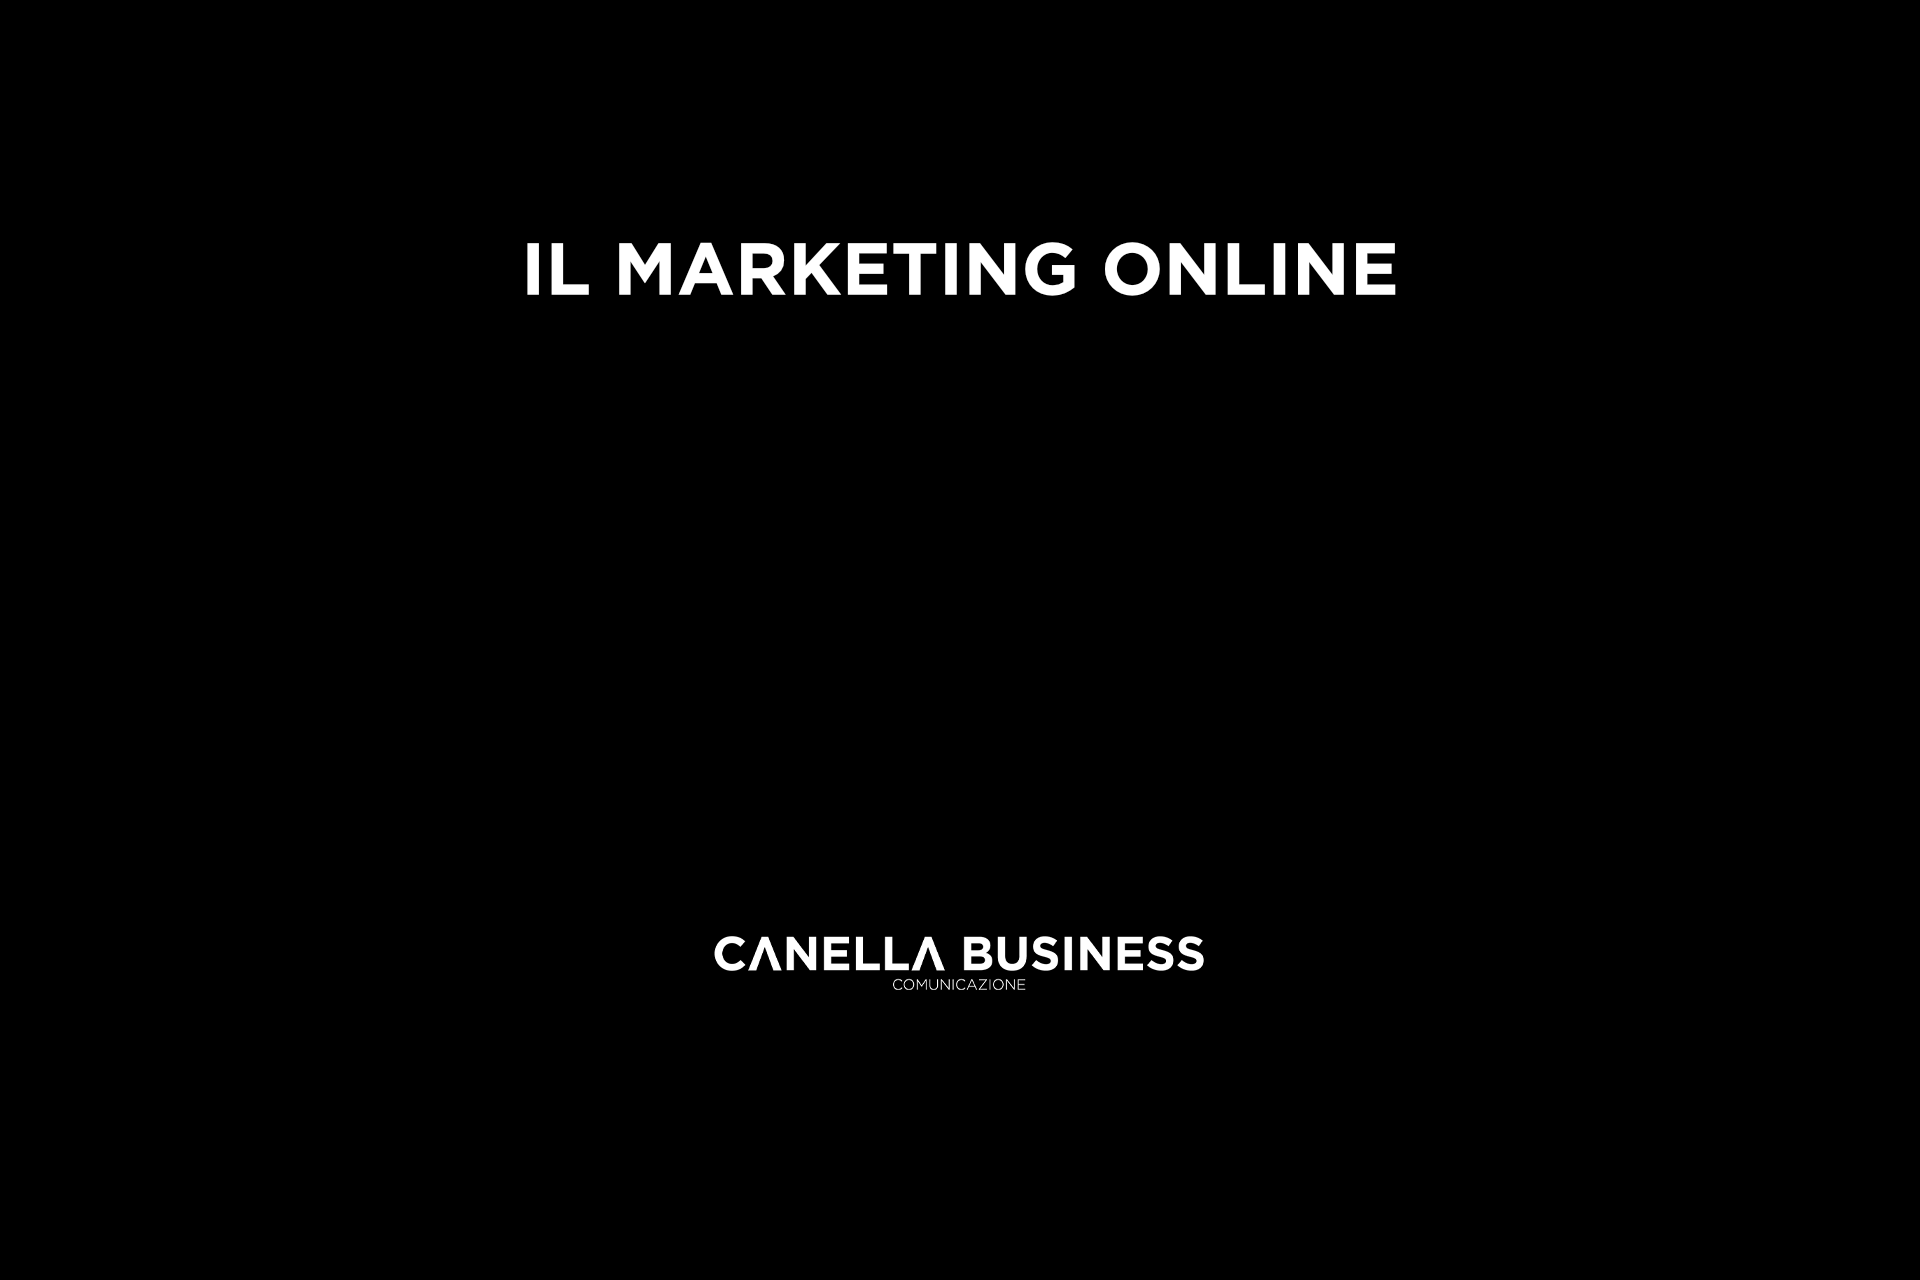 Il marketing online